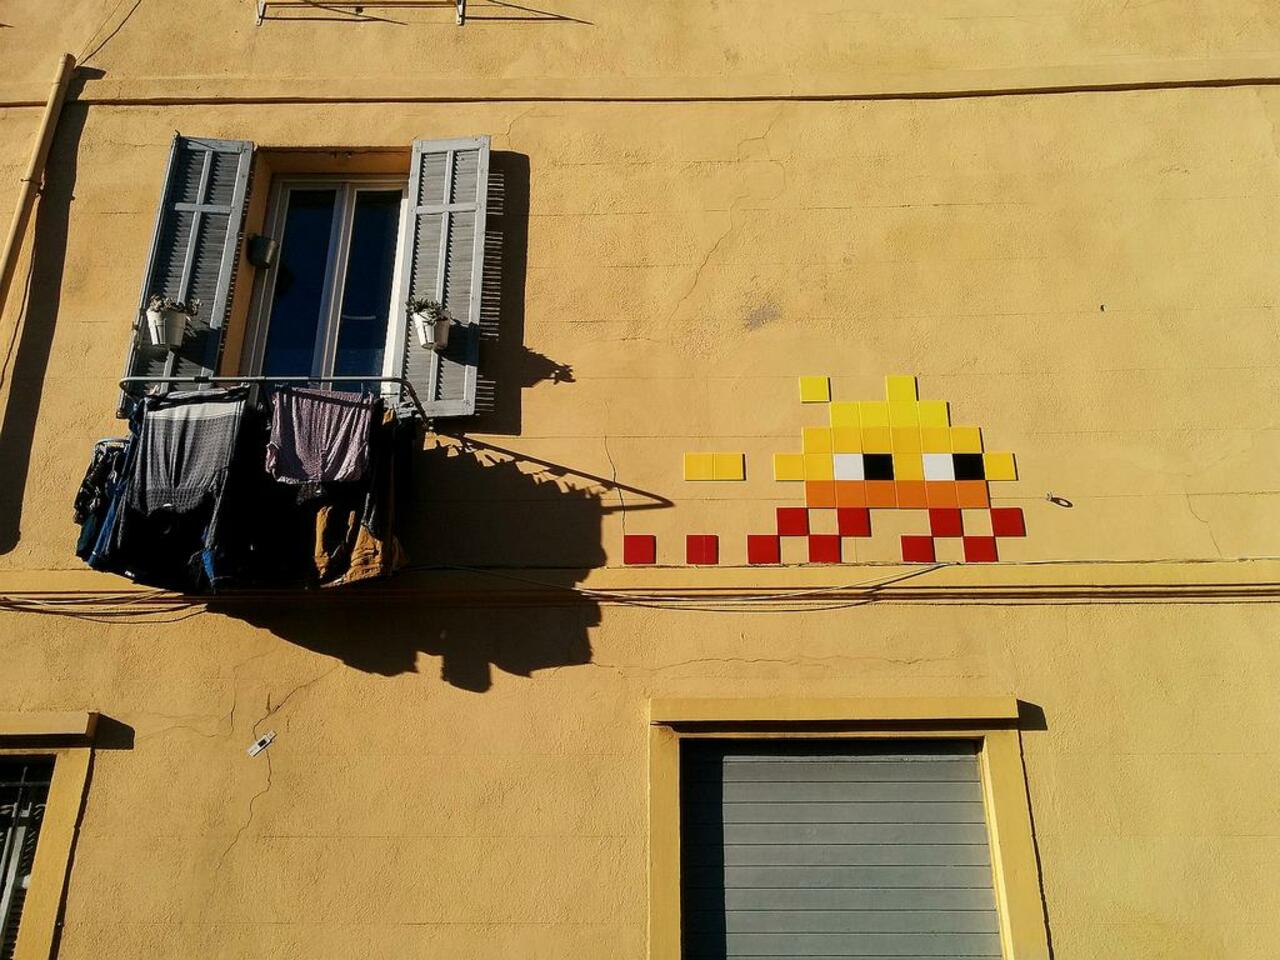 Street Art by Space Invader in #Marseille http://www.urbacolors.com #art #mural #graffiti #streetart http://t.co/ecykipDYJw